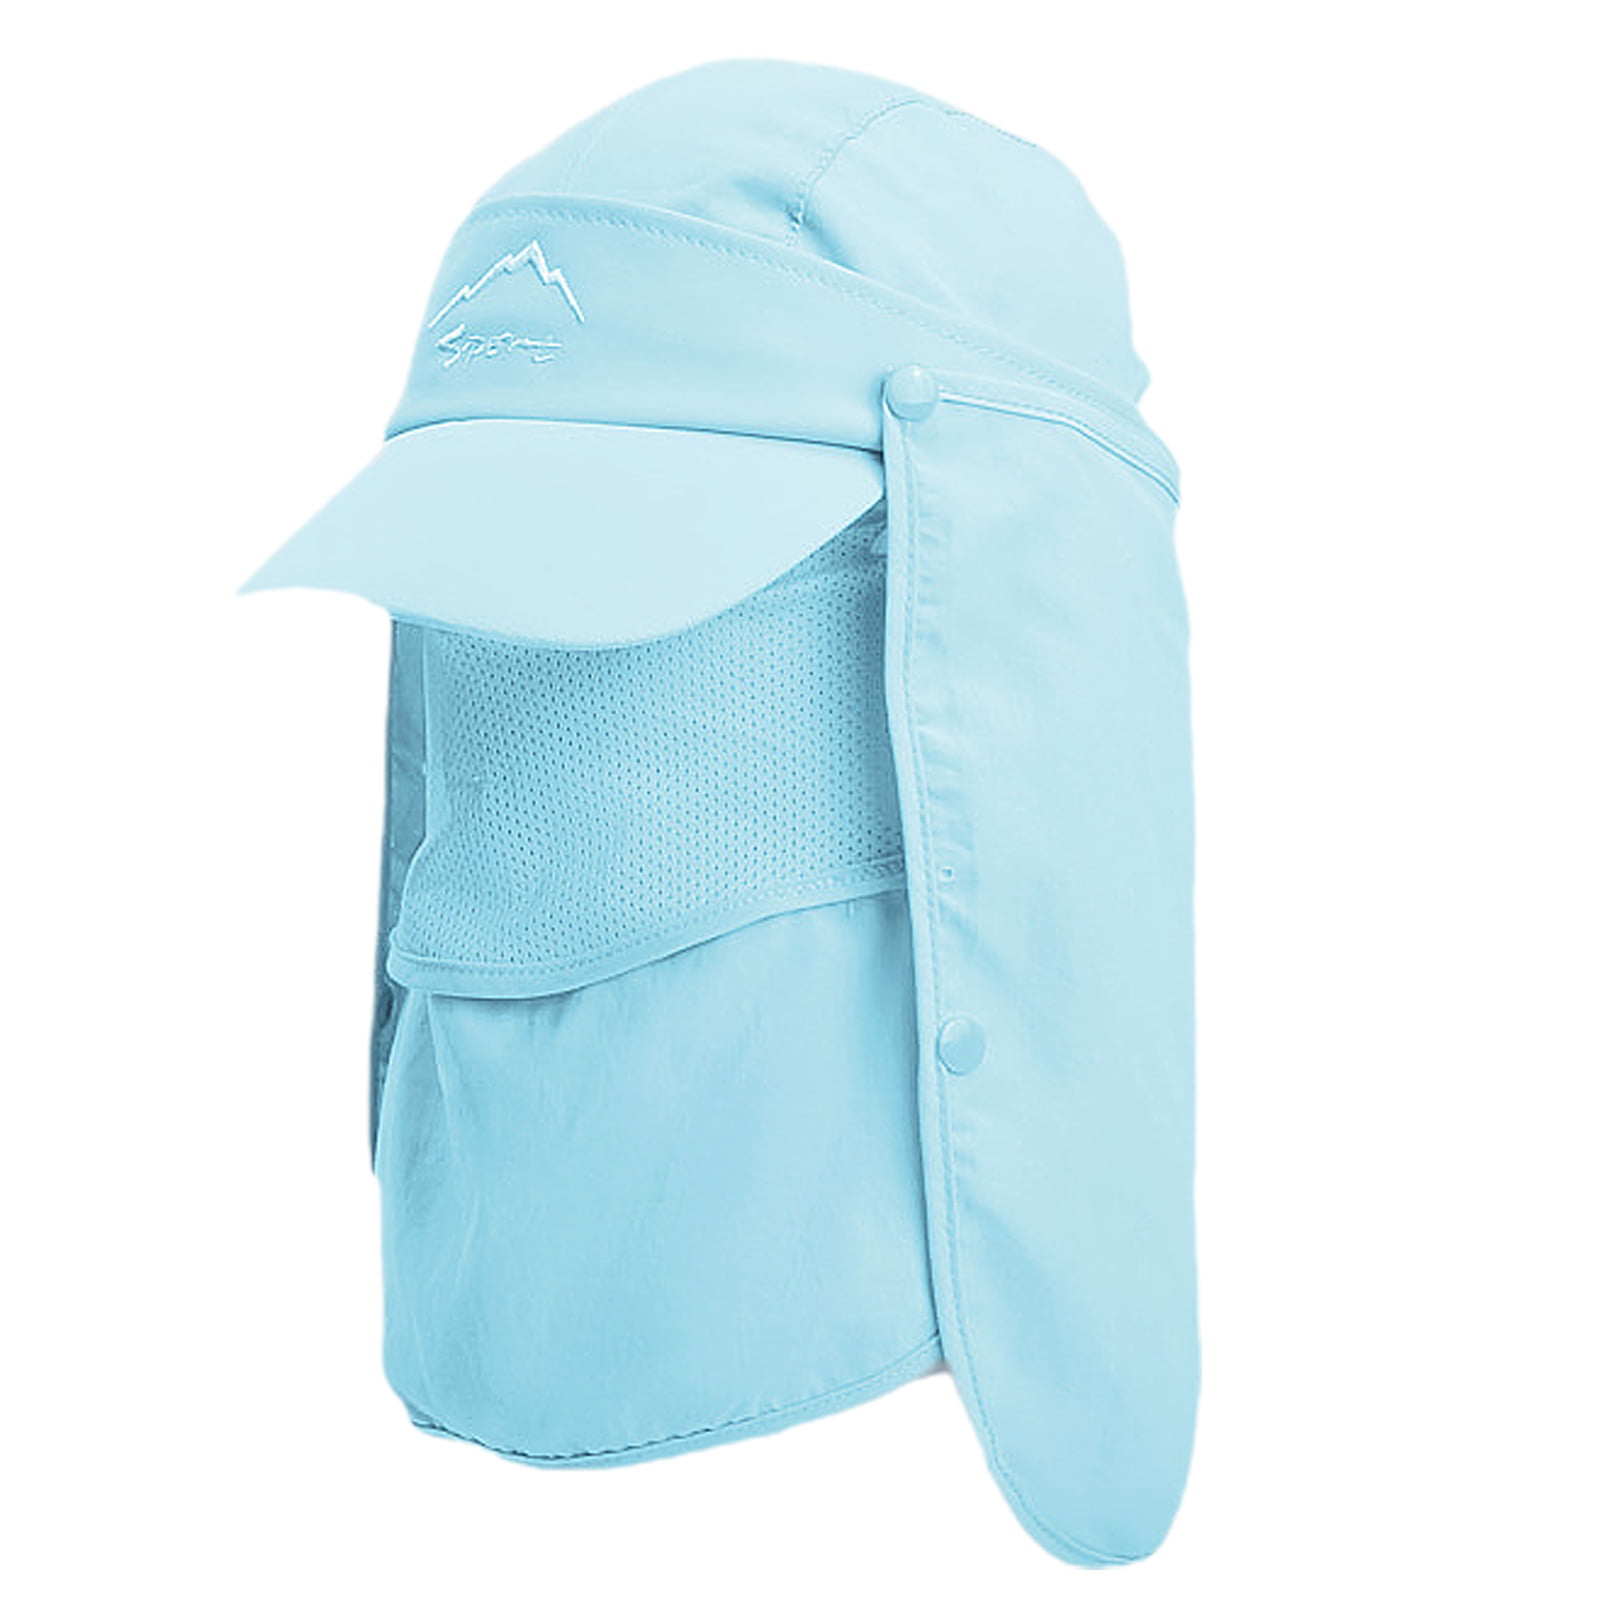 Yirtree Fishing Hat Sun Cap UPF 50+ Outdoor Hiking Hat with